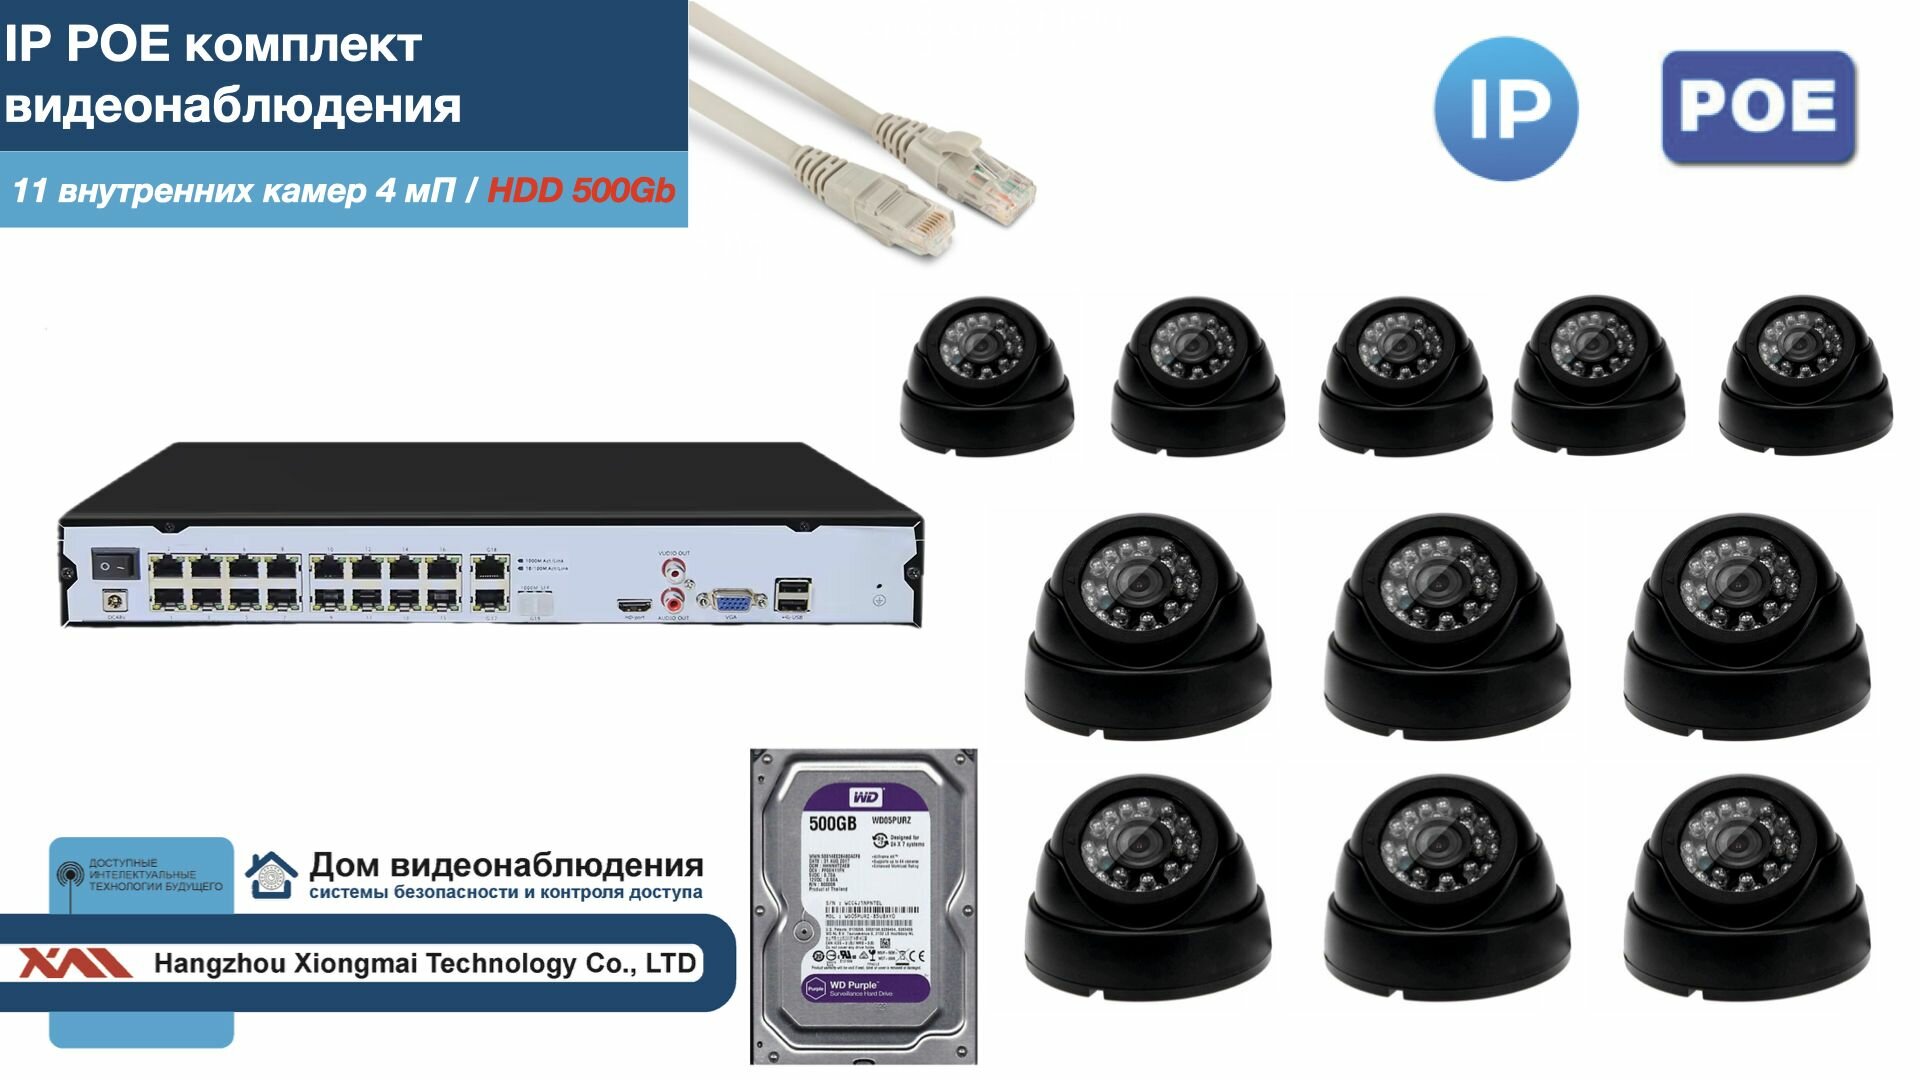 Полный IP POE комплект видеонаблюдения на 11 камер (KIT11IPPOE300B4MP-2-HDD500Gb)